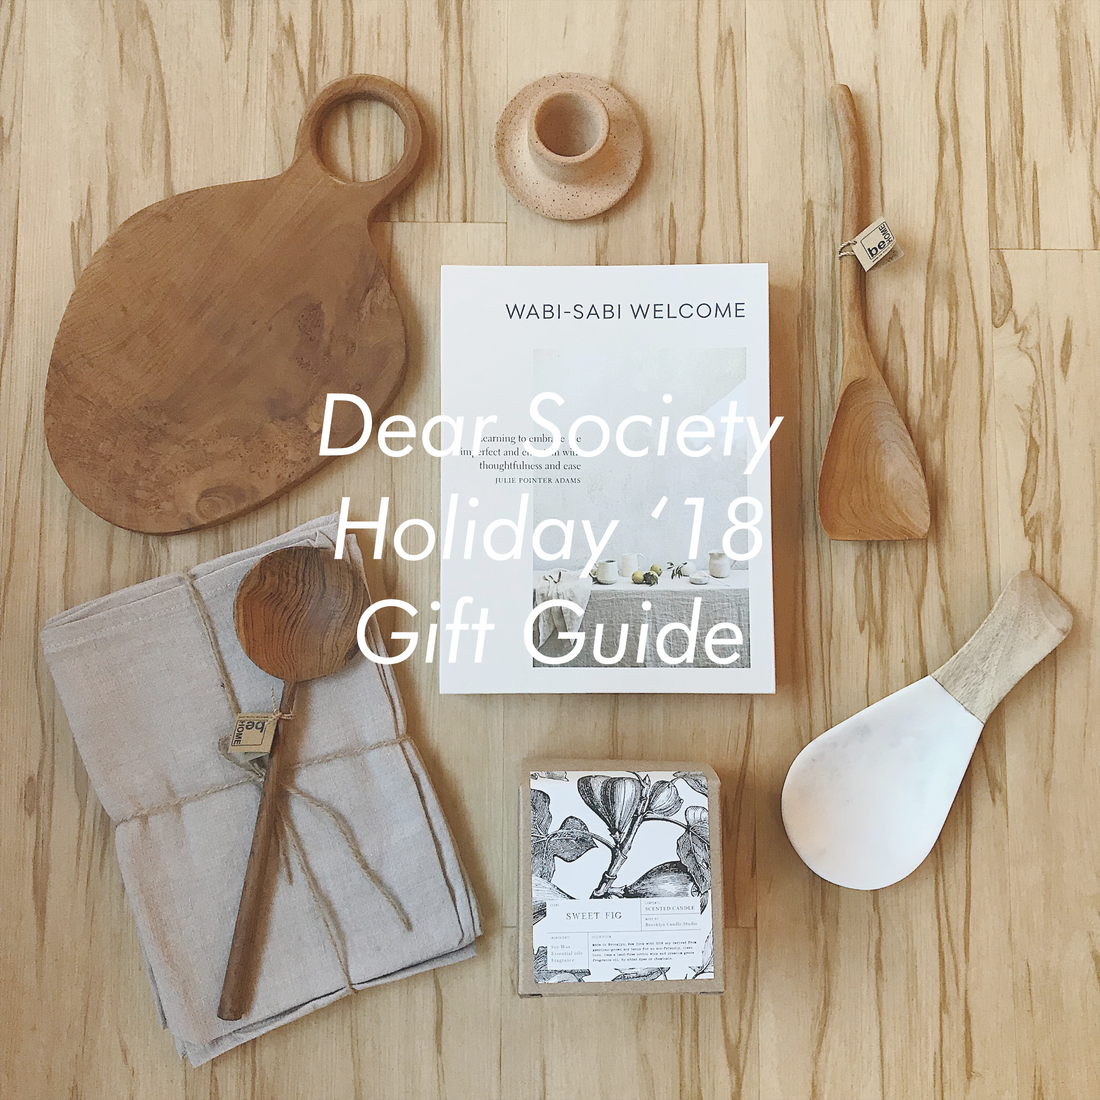 Dear Society Holiday 2018 Gift Guide